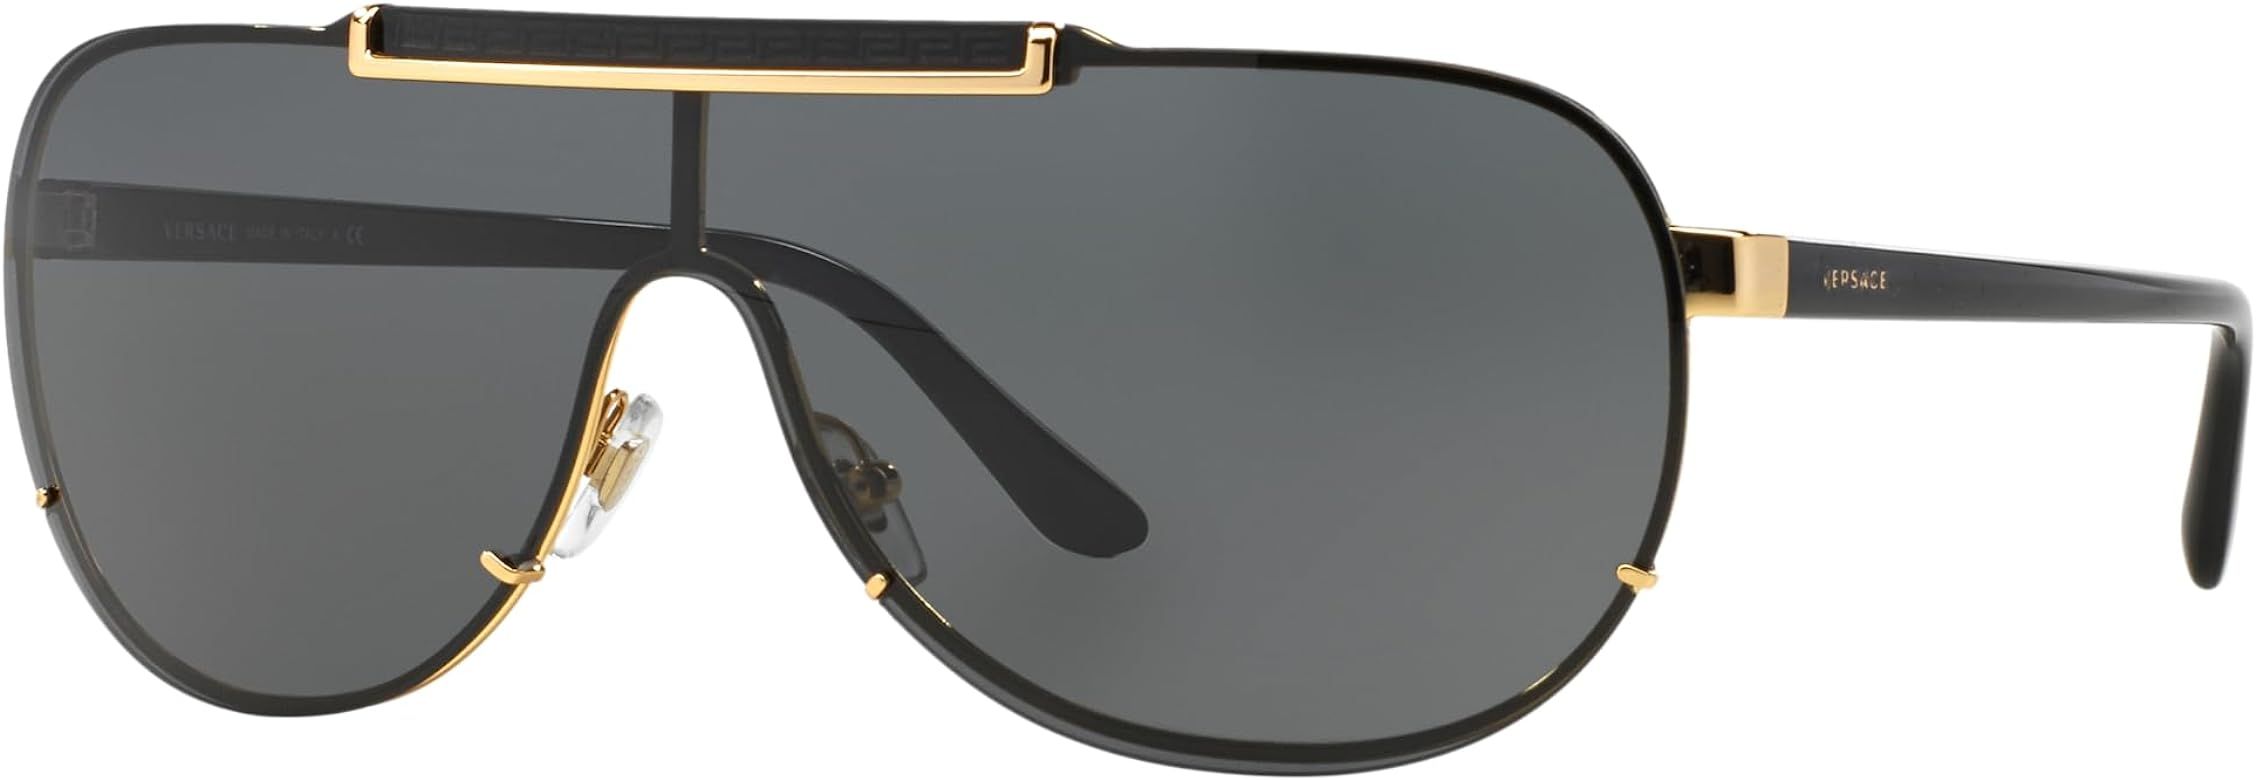 Versace Man Sunglasses Gold Frame, Dark Grey Lenses, 0MM | Amazon (US)